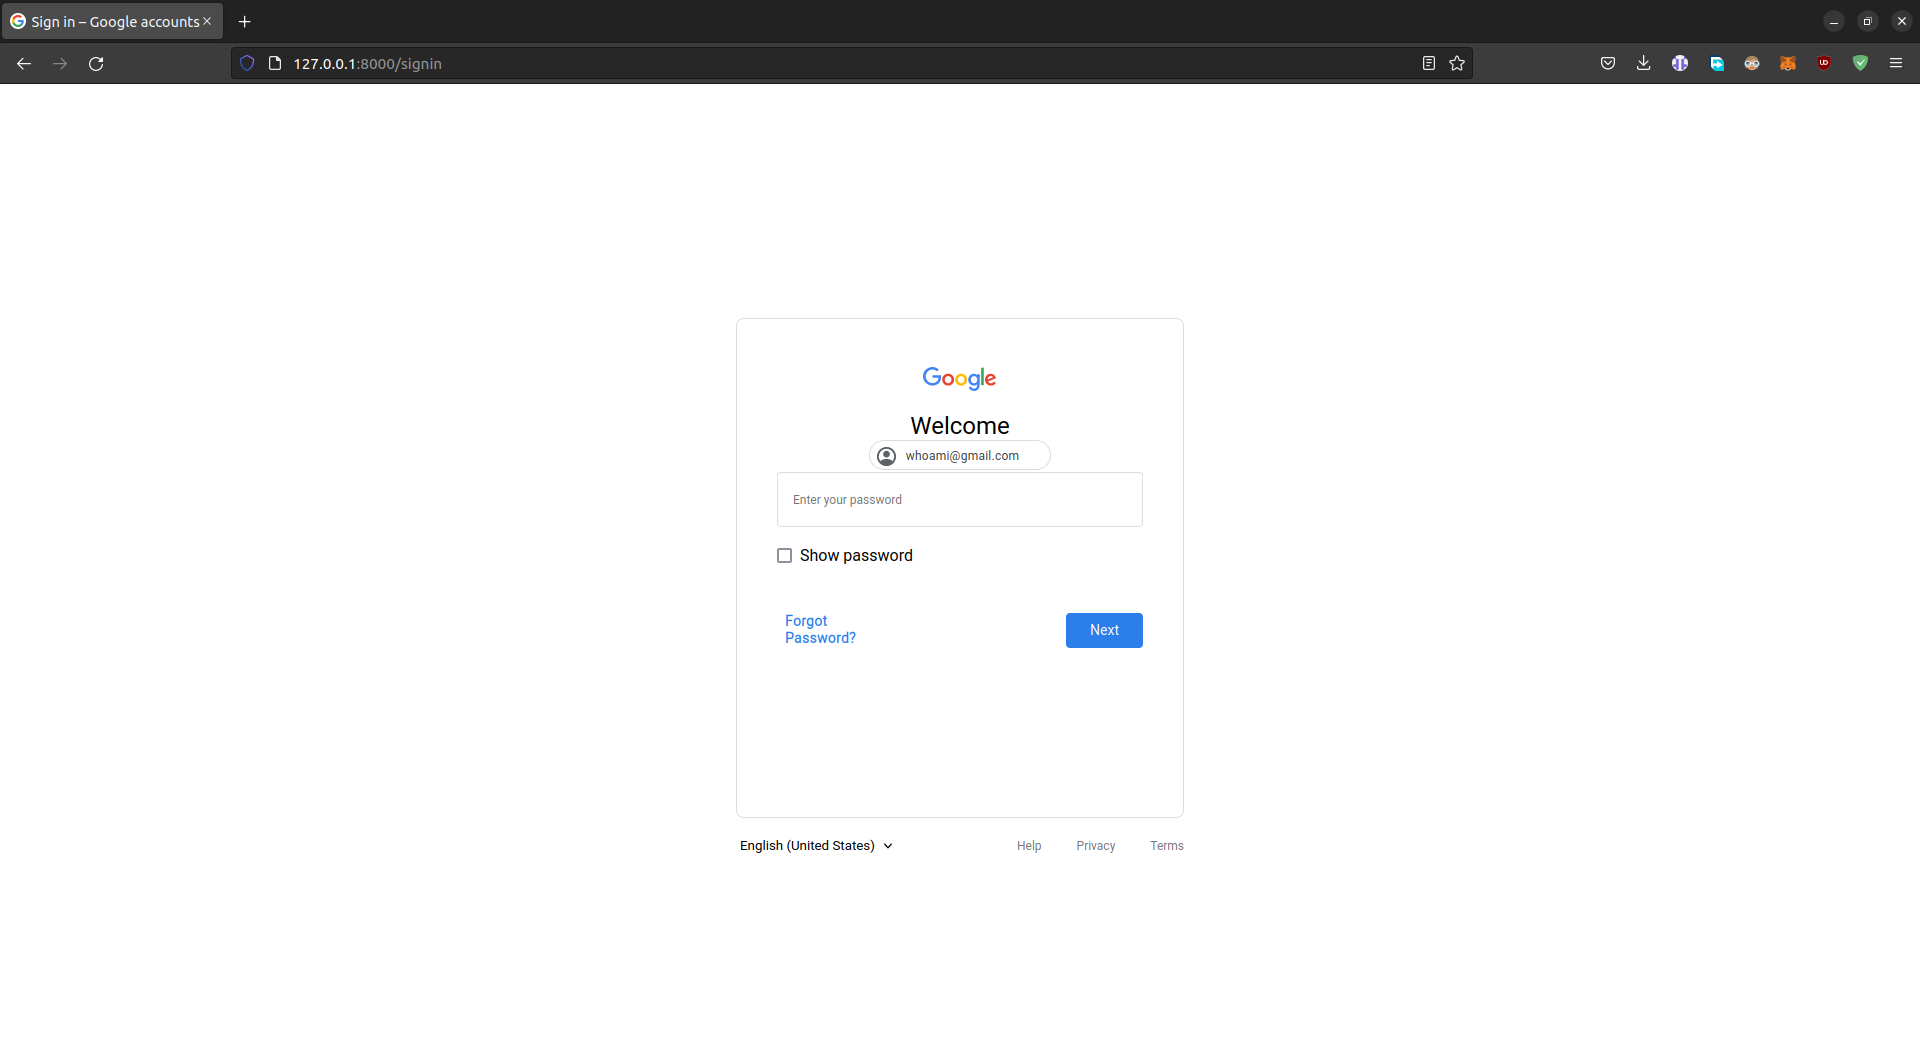 Google Login Page Phisher Password Page Image